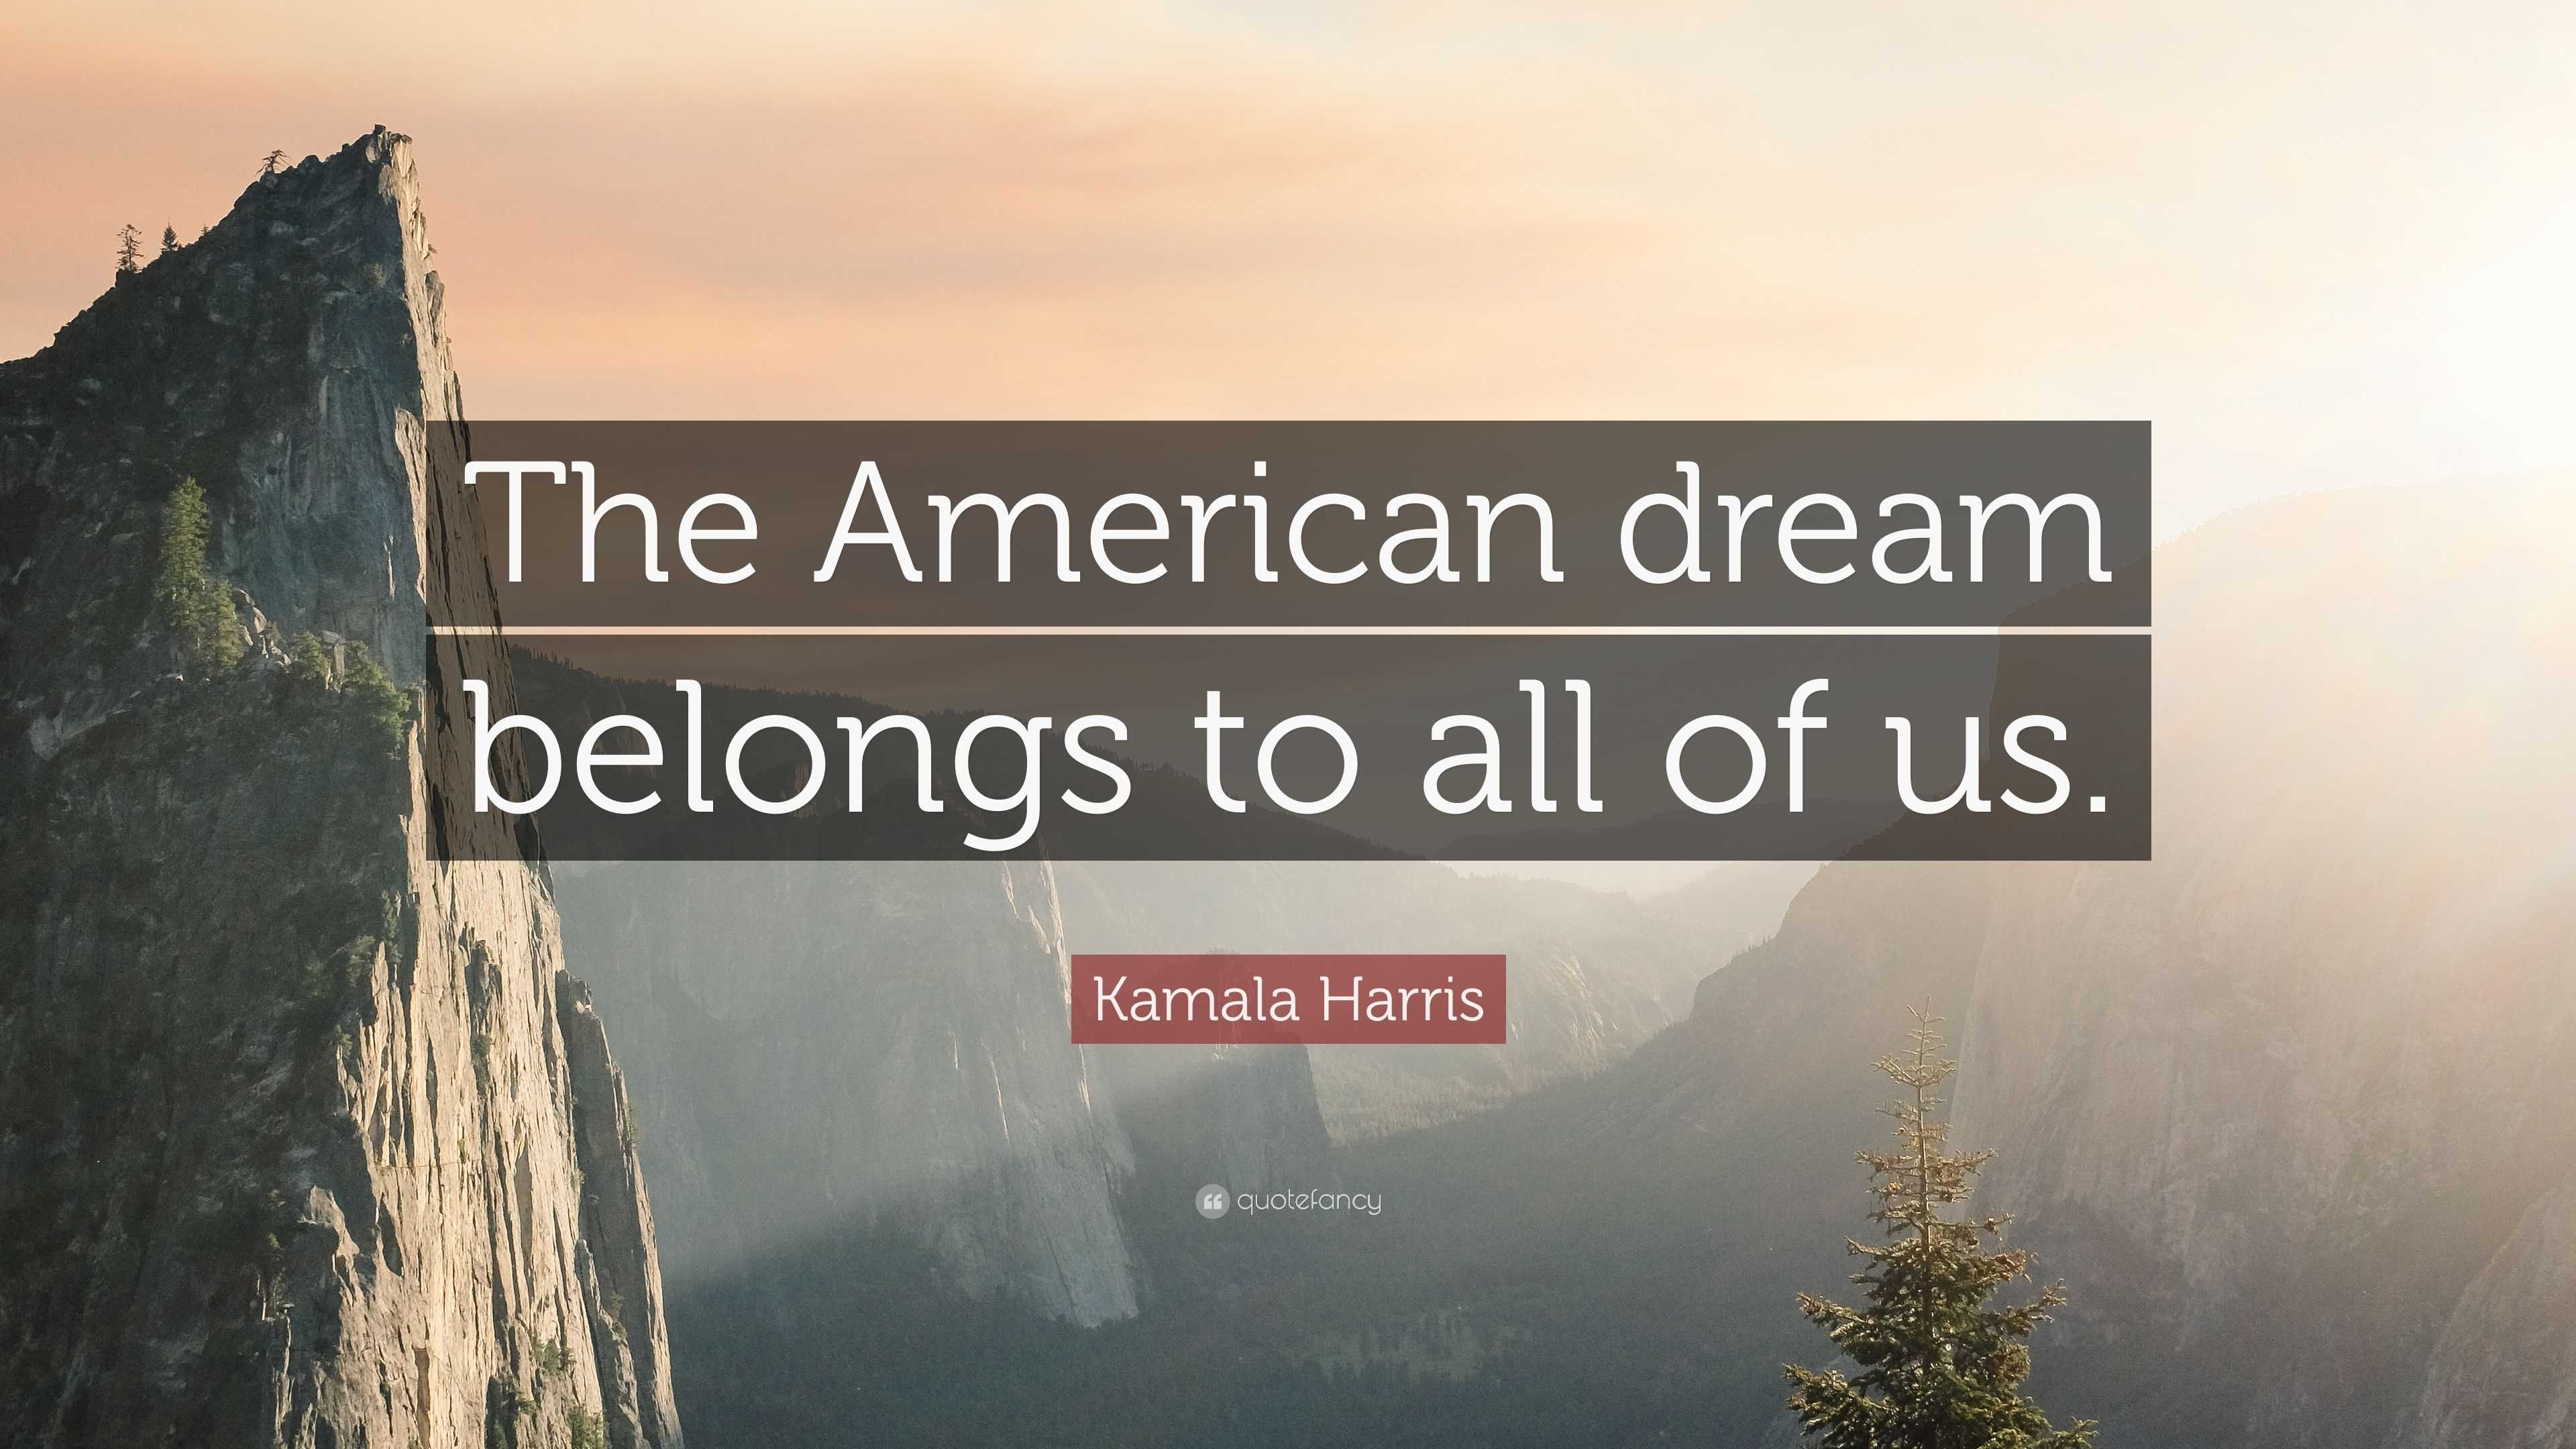 Kamala Harris Quote: “The American dream belongs to all of us.”
